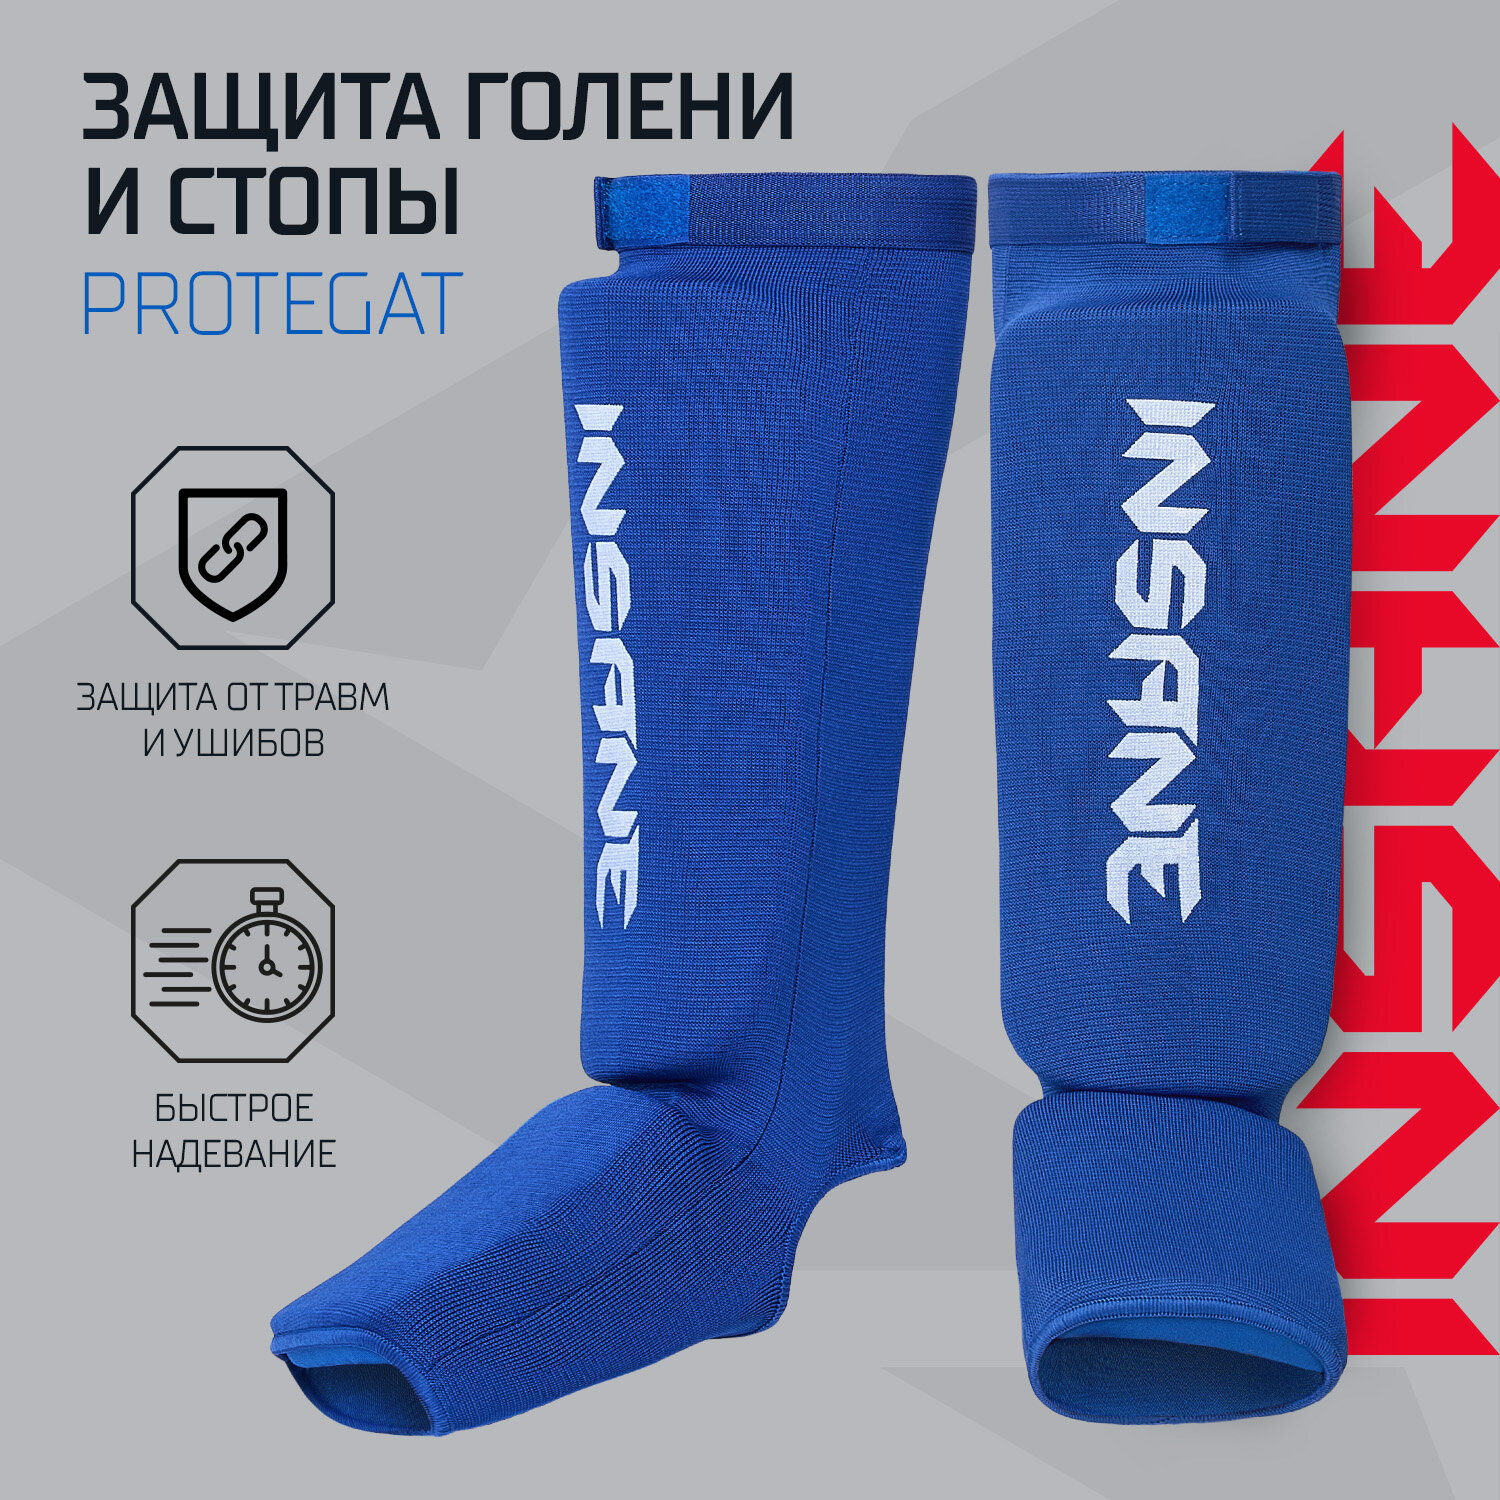 Защита голень-стопа INSANE PROTEGAT IN22-SG200, синий, размер S